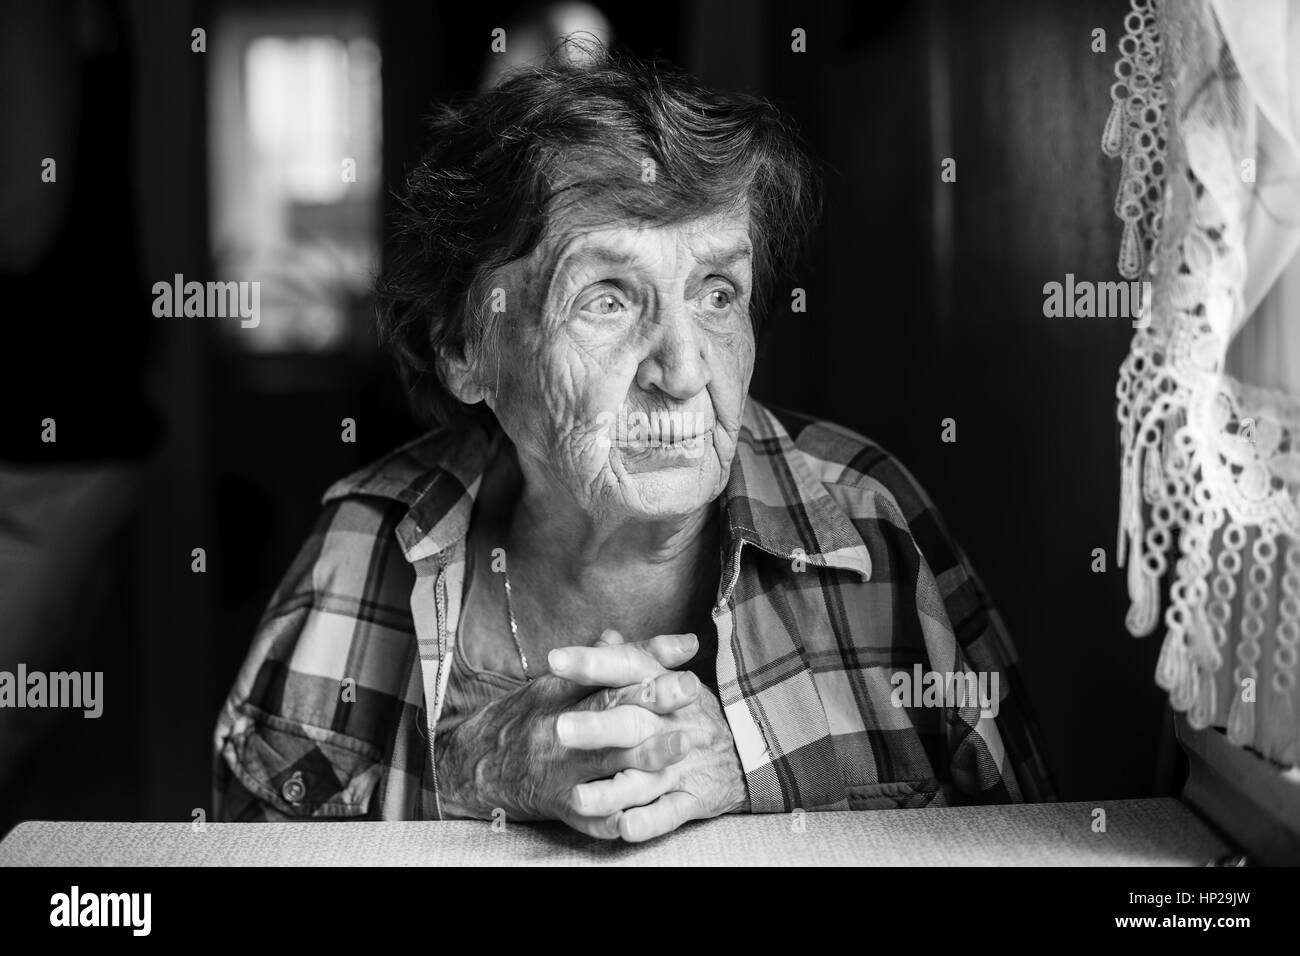 Elderly Woman Black And White Photo Close Up Stock Photo Alamy